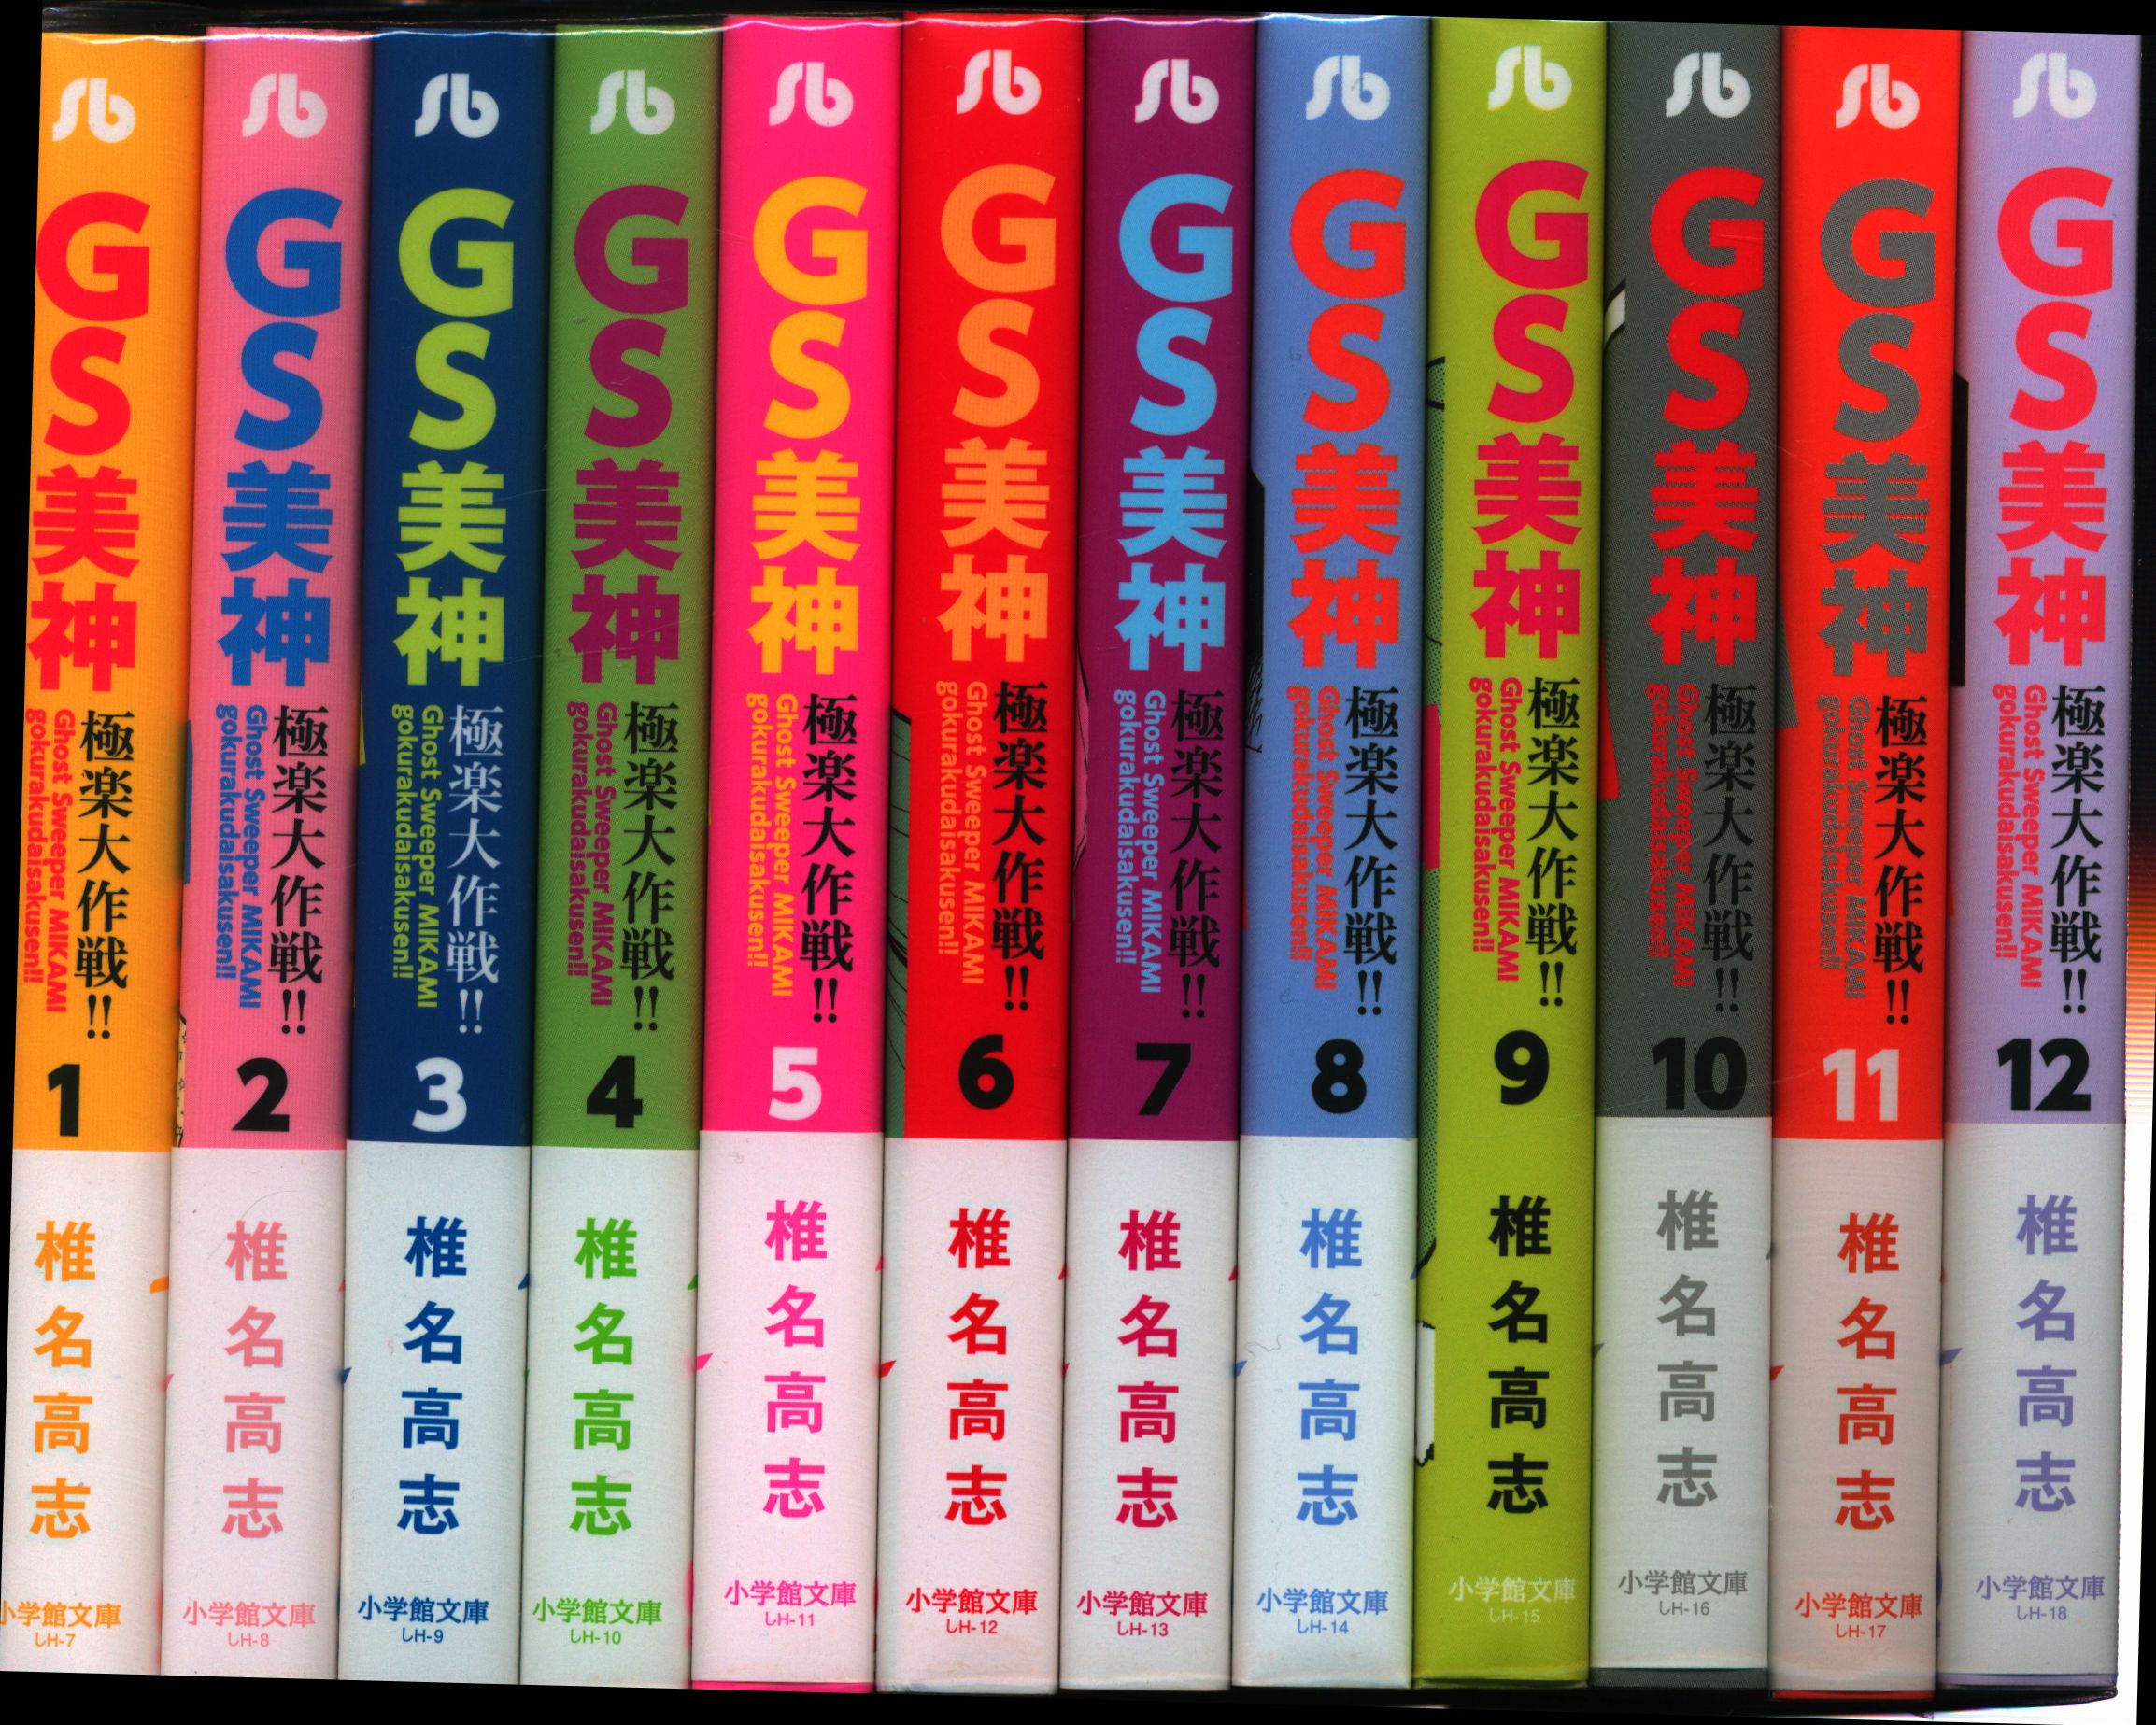 Shogakukan Shogakukan Bunko Takashi Shiina Ghost Sweeper Mikami The Great Paradise Battle Paperback Version Complete 23 Part Set Mandarake Online Shop